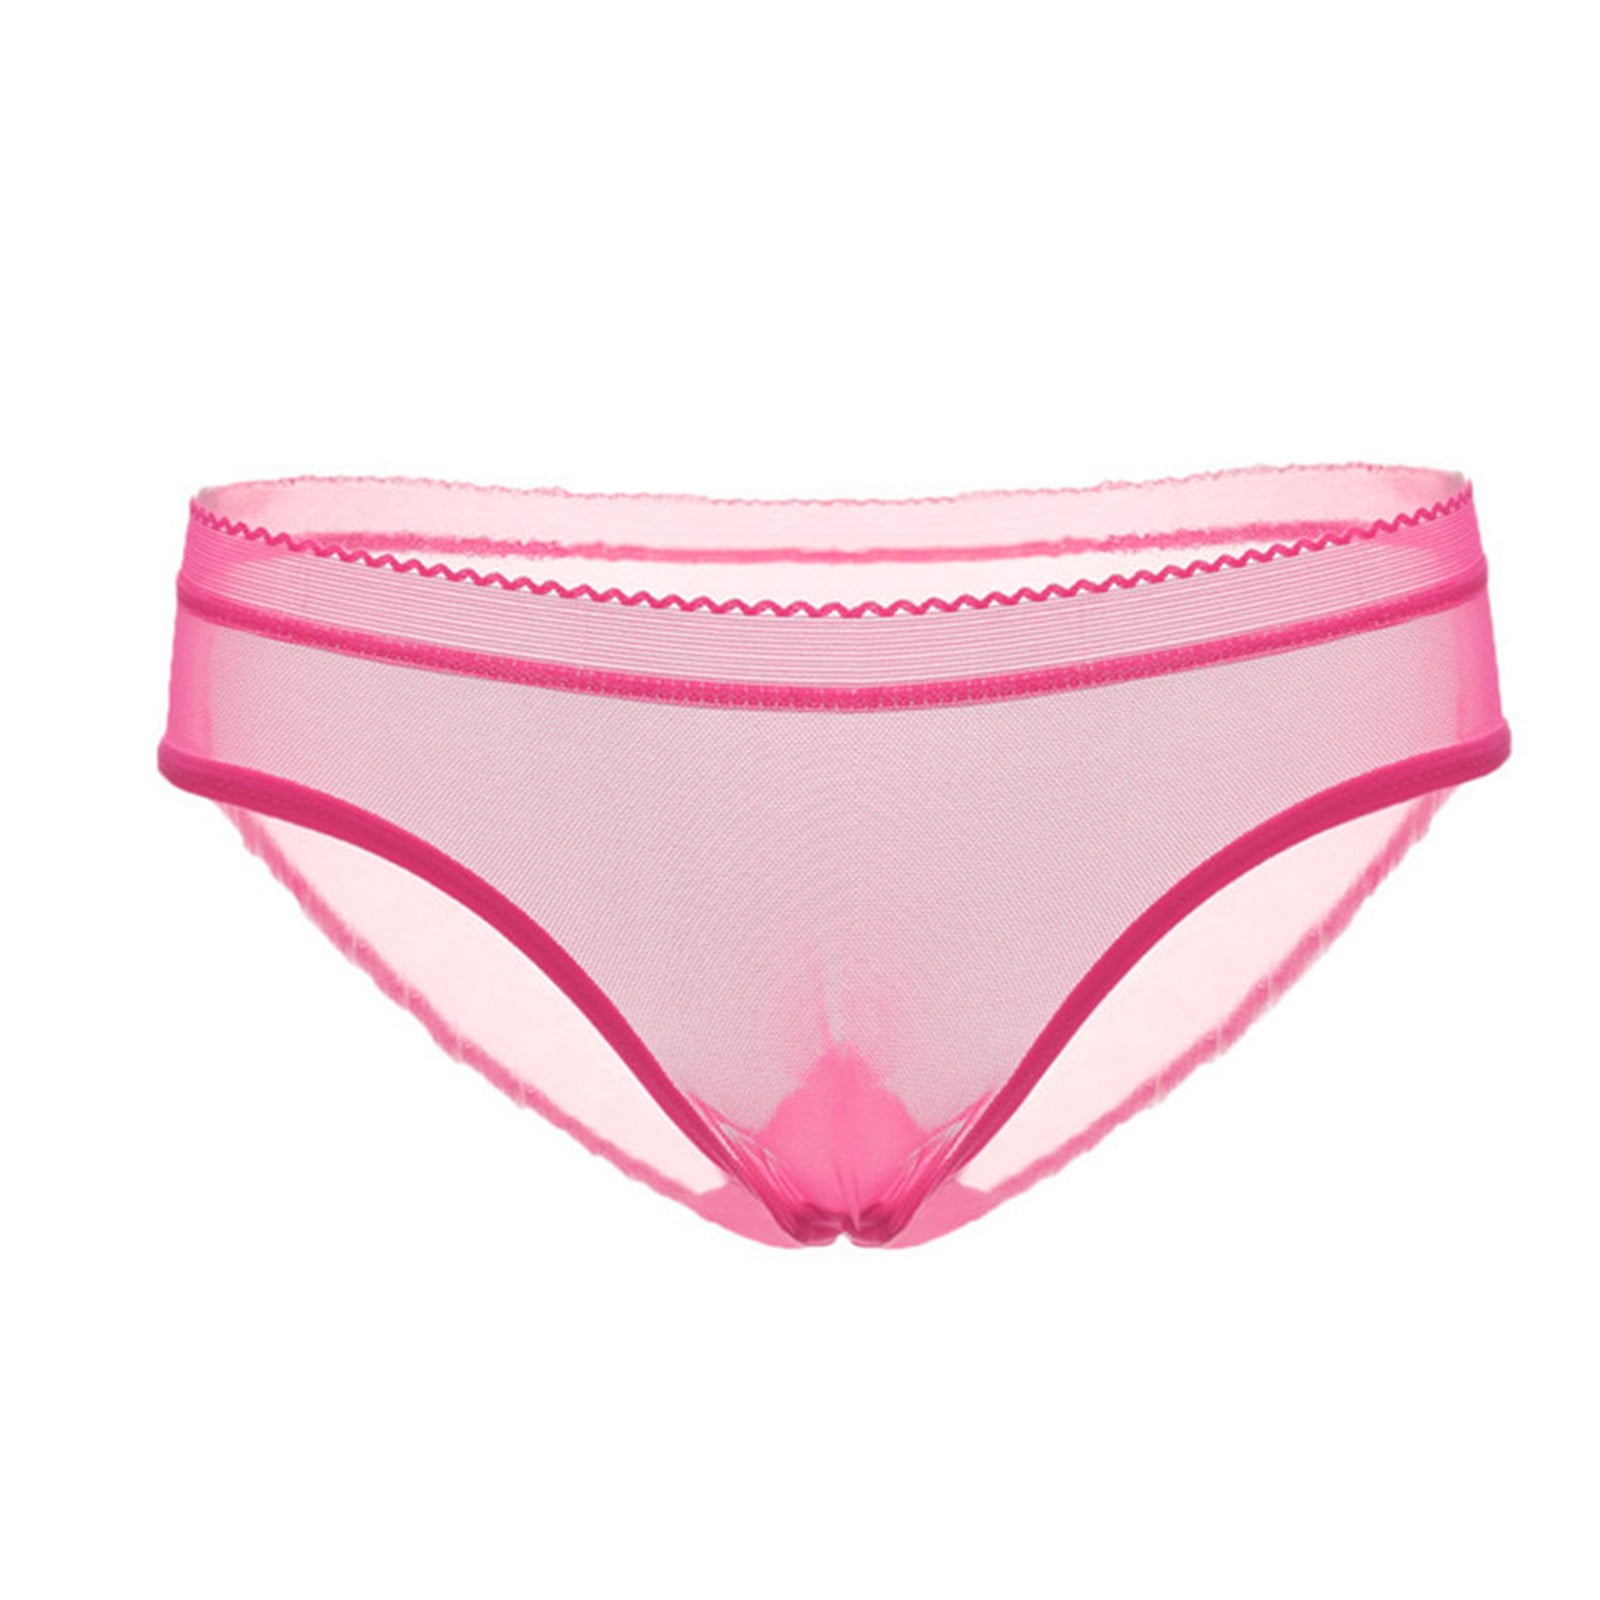 CBGELRT Women's Brief Transparent Panties Women's Underwear Mesh See  Through Comfort Briefs Low Rise Underpants seamless Underwear Thong XL Hot  Pink